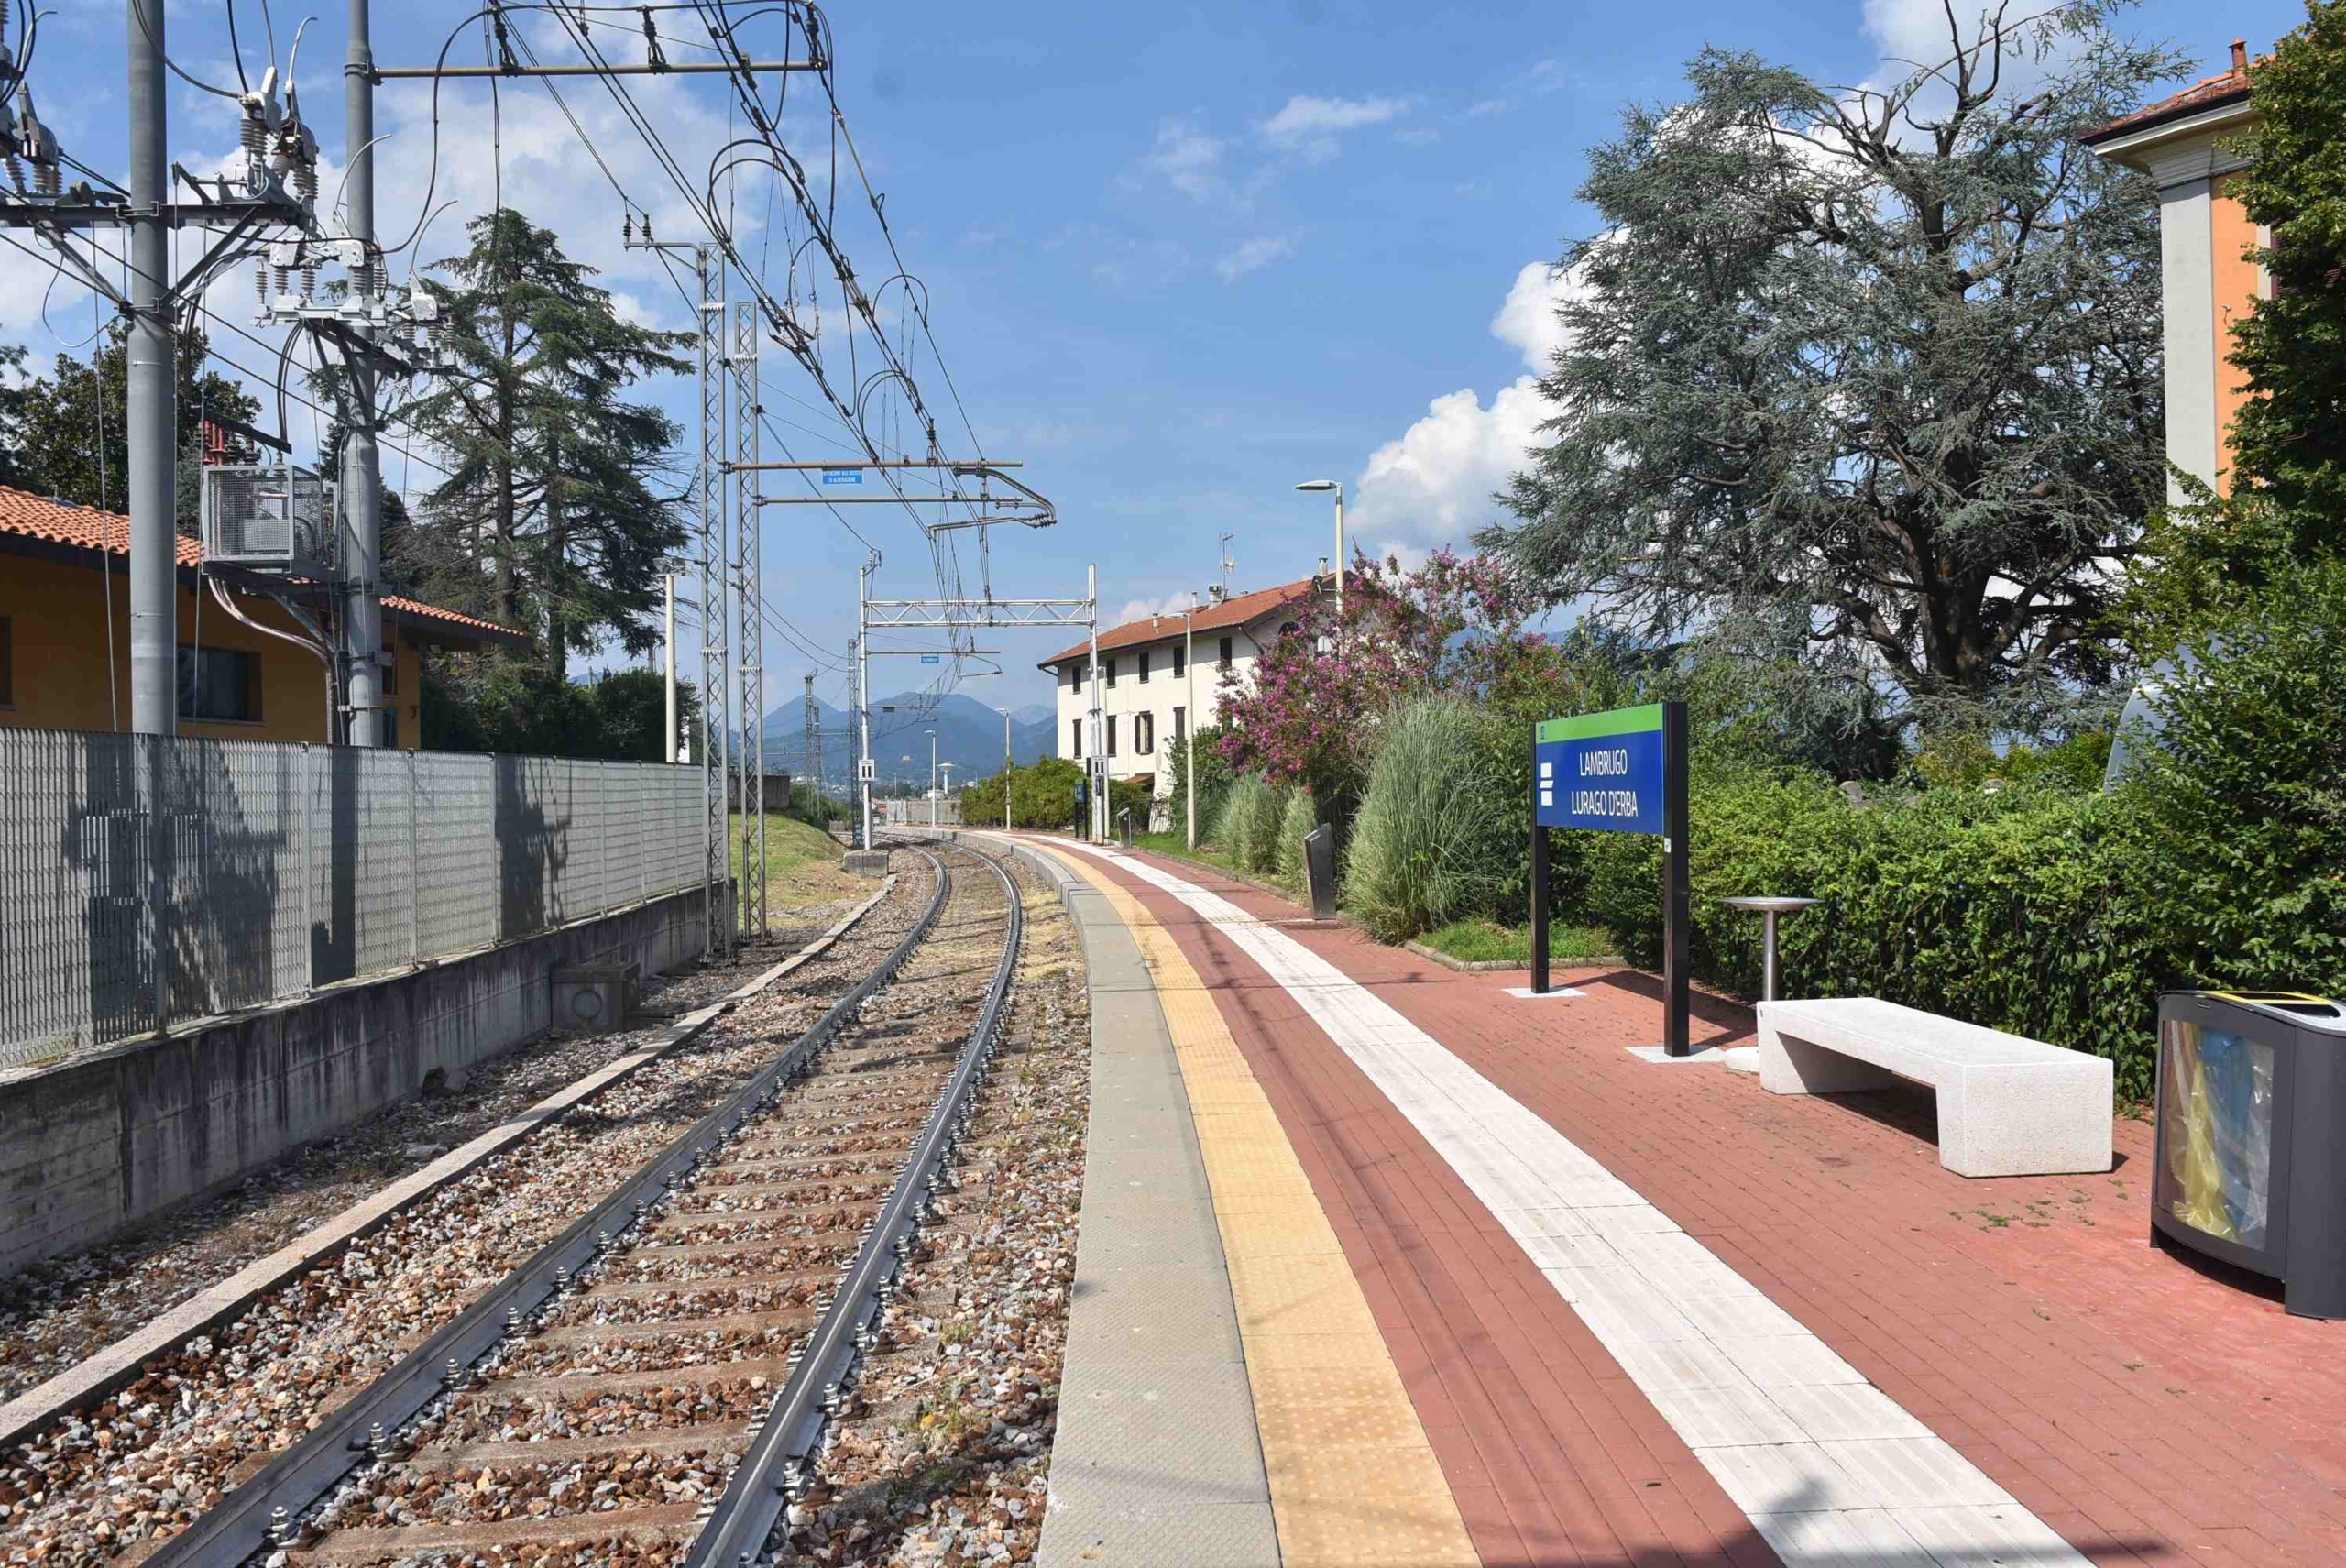 Stazione Lambrugo-Lurago d’Erba